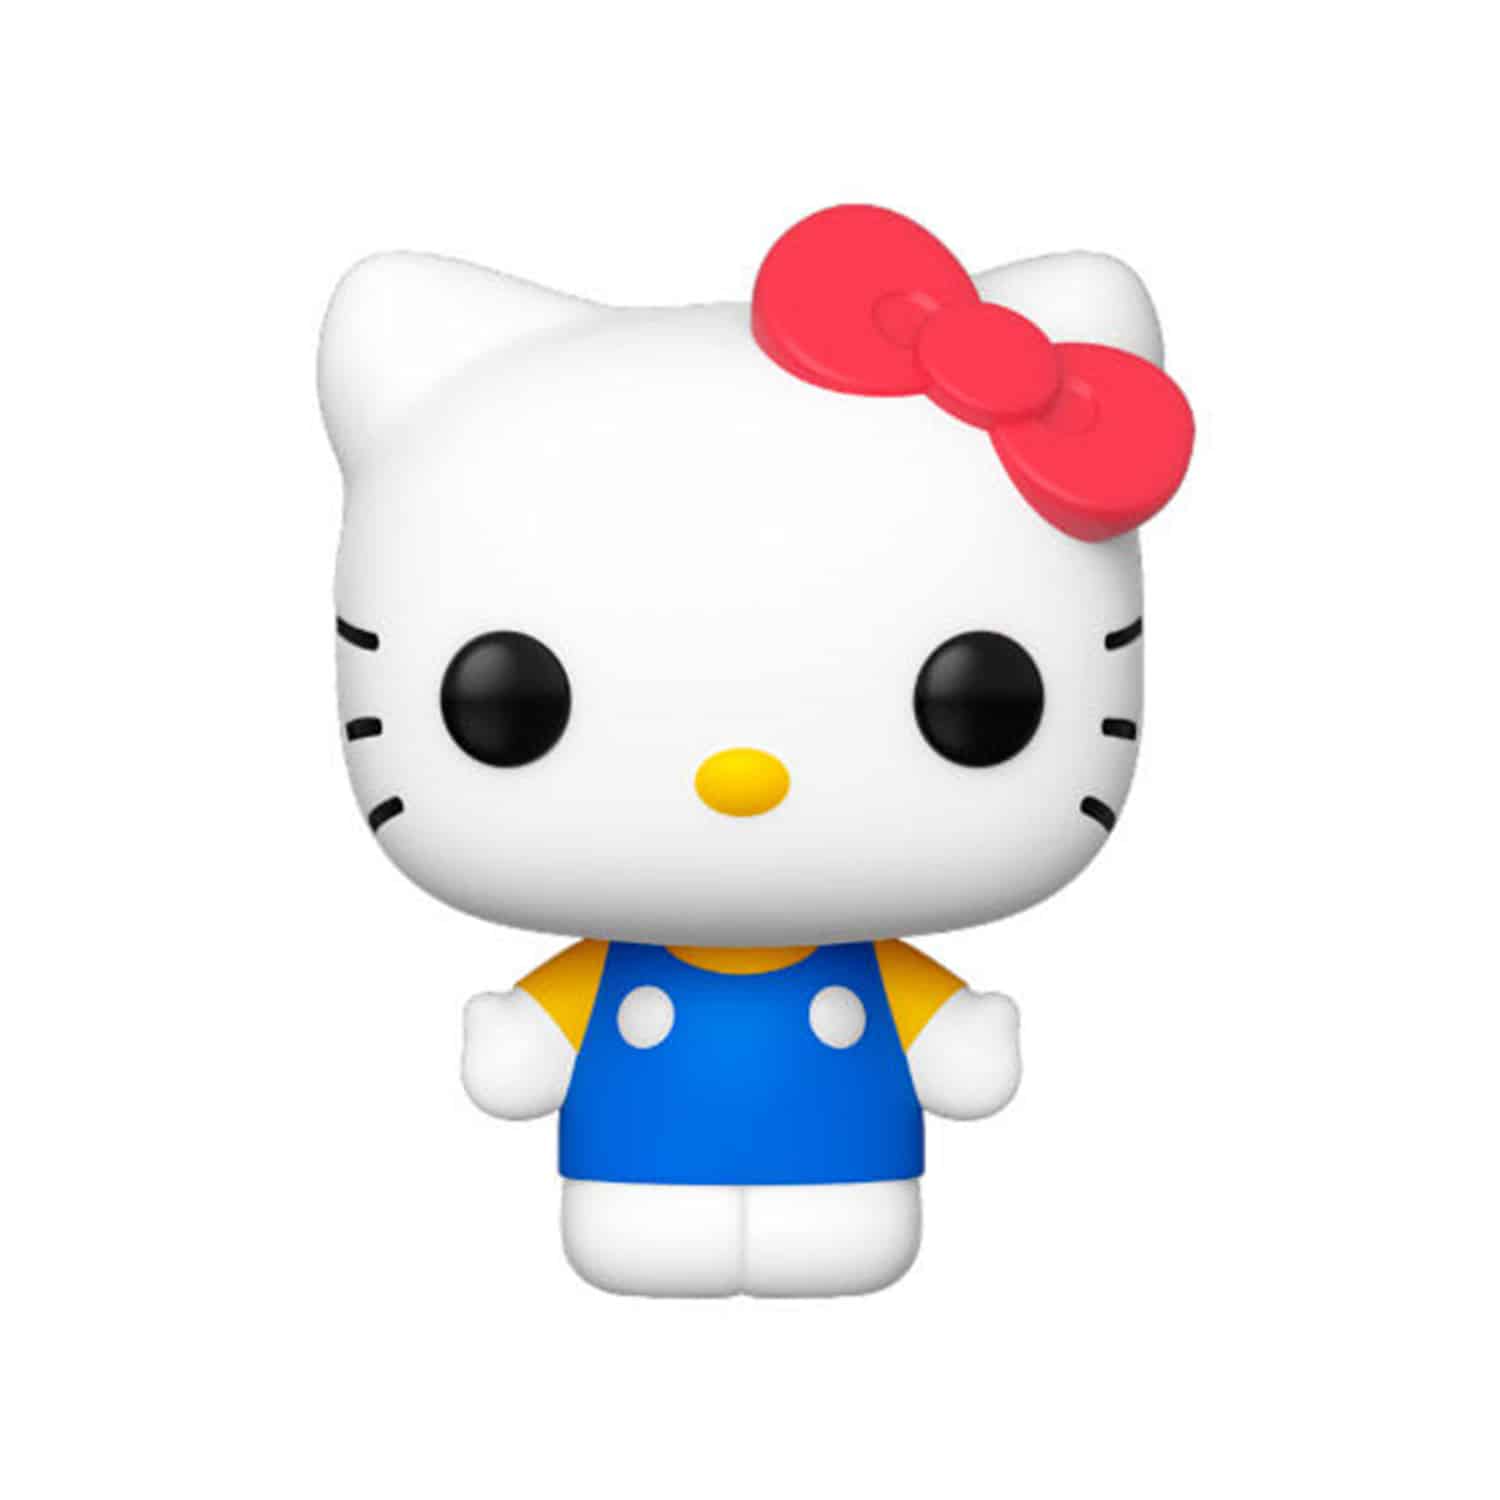 Hello Kitty - Hello Kitty (Classic) Funko Pop!